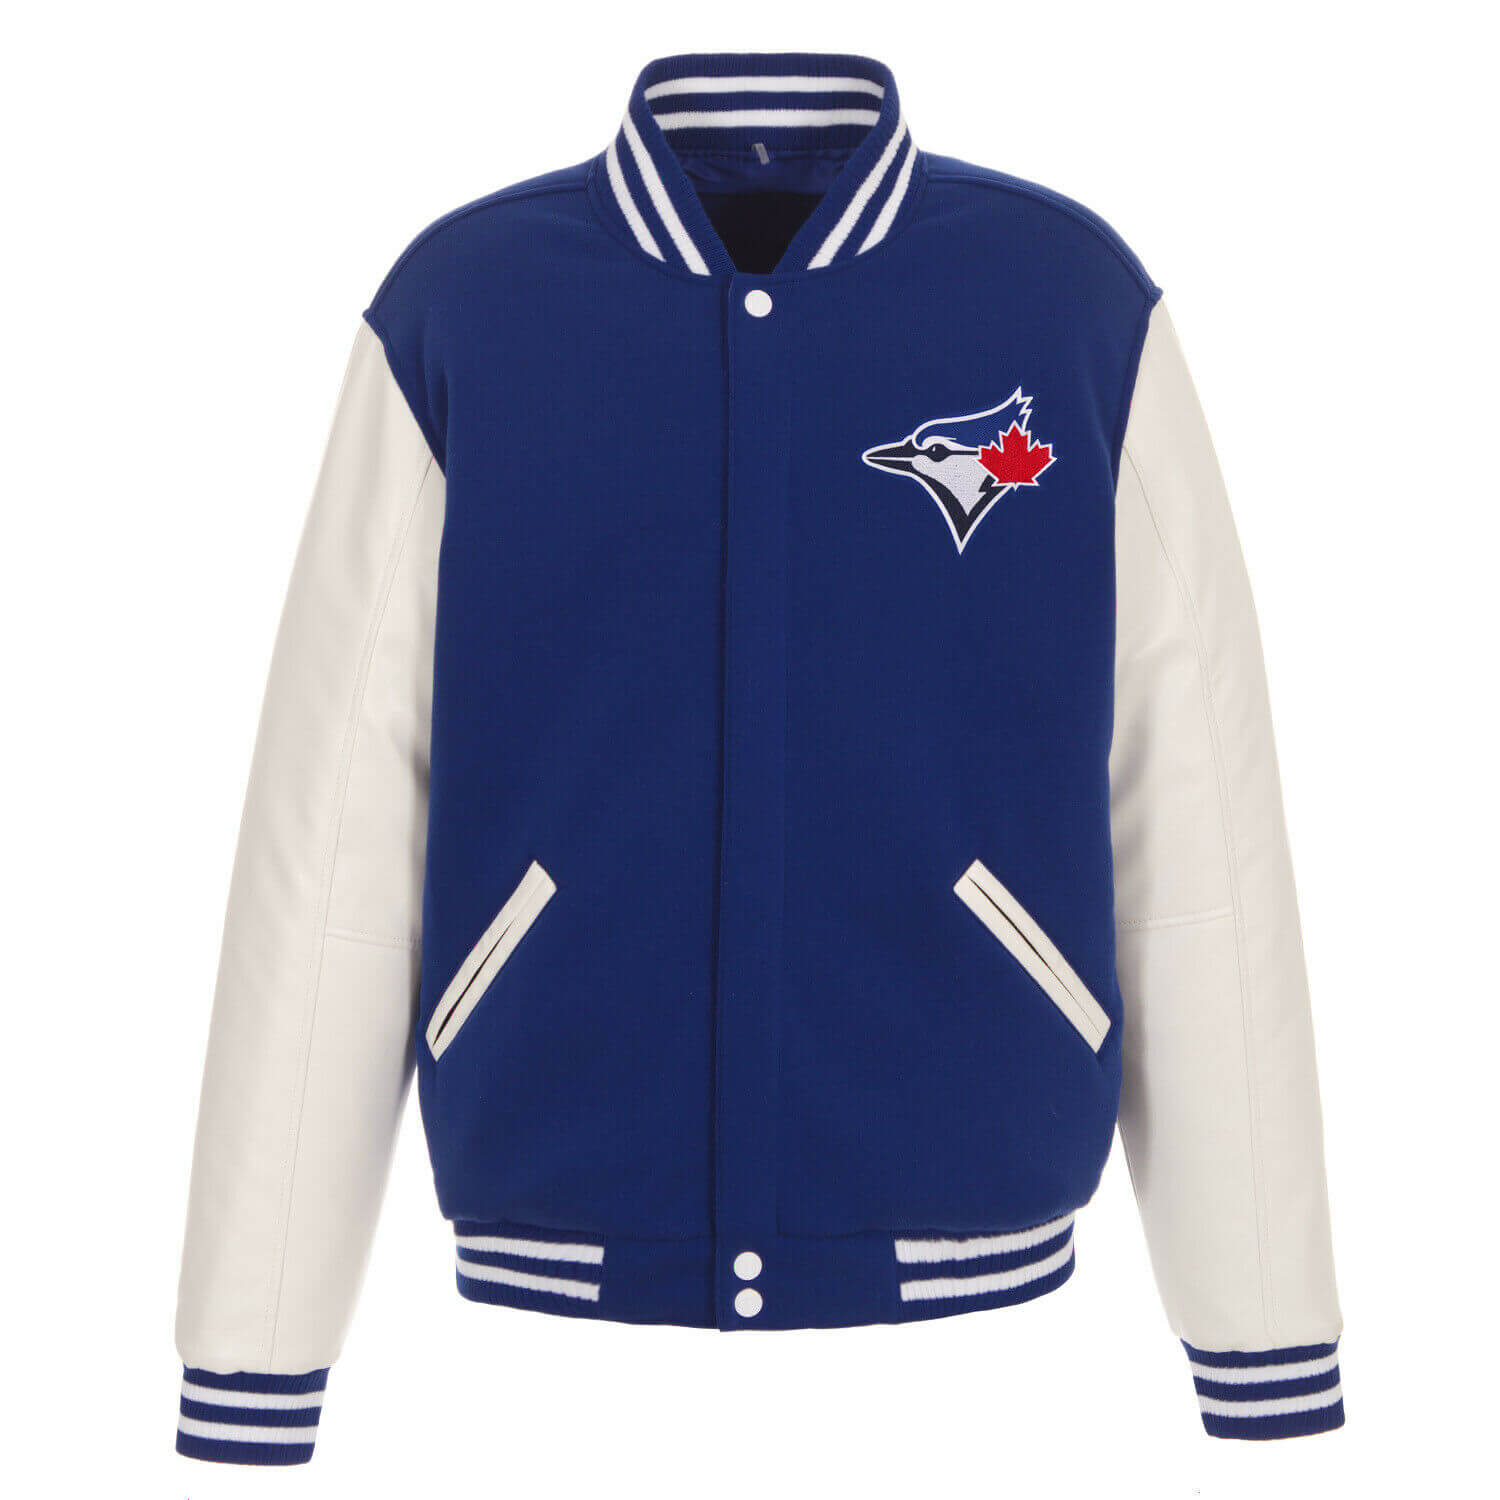 Buy Vintage MLB Toronto Blue Jays Sweatshirt Sweater Baseball New Online in  India 